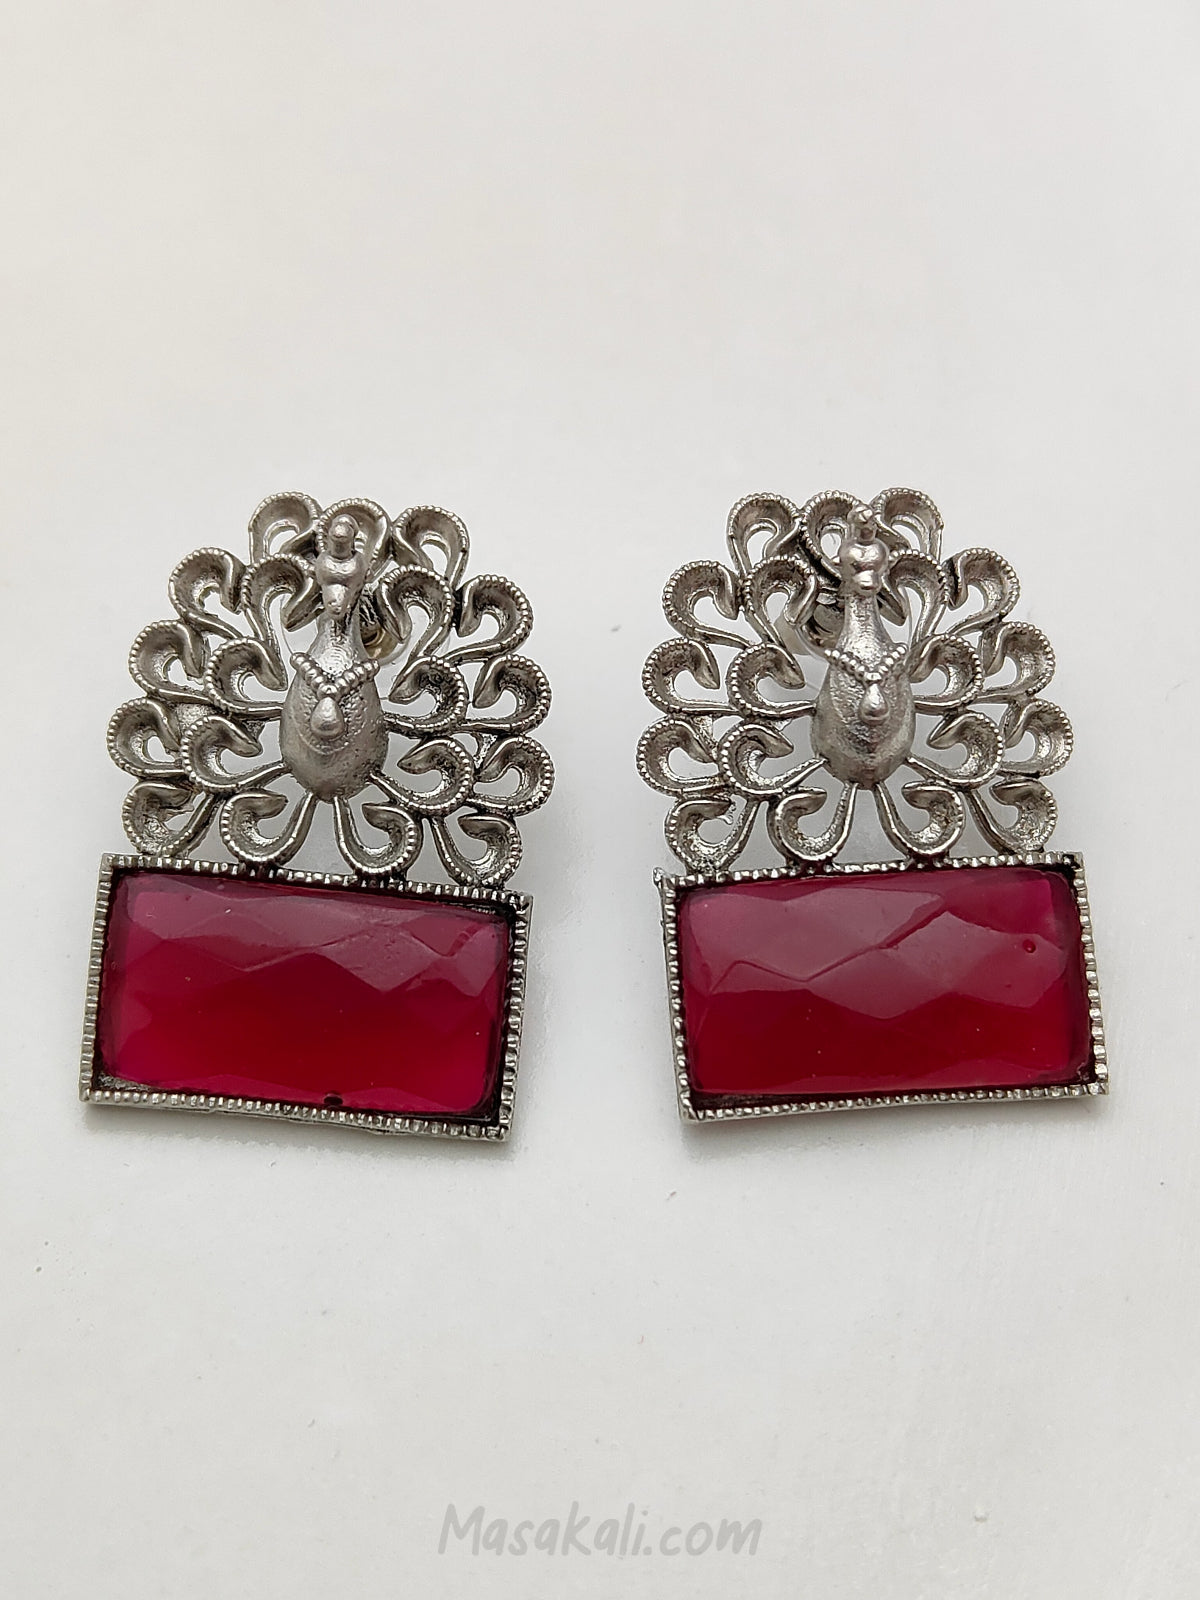 Peacock Design Ruby Stone Stud Earrings, Silver Lookalike Indian Handmade Jewellery For Women